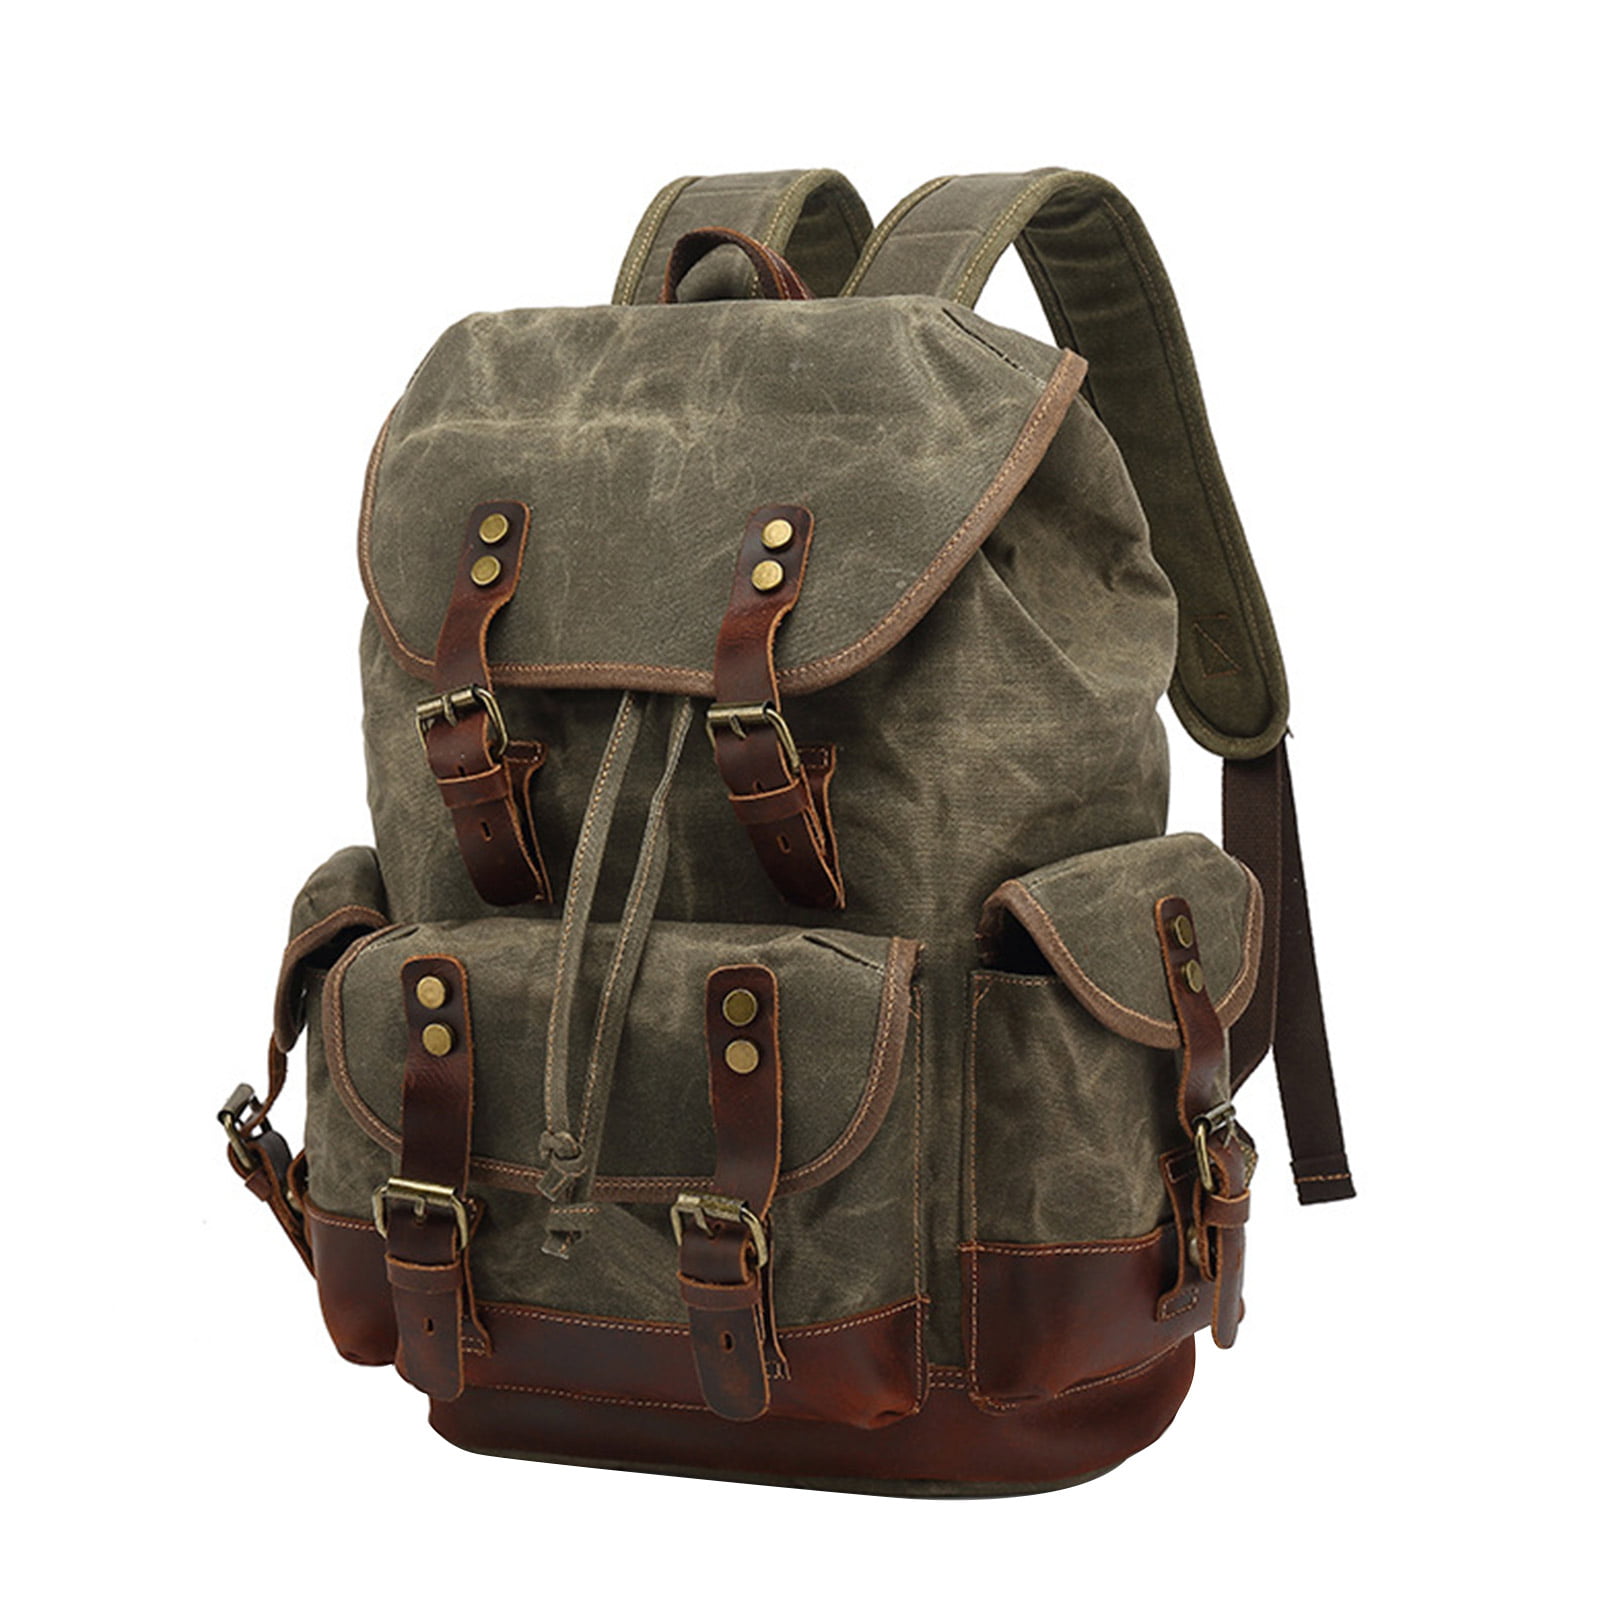 ASR Outdoor Waxed Canvas Backpack Travel Shoulder Bag Water Resistant OD Green 